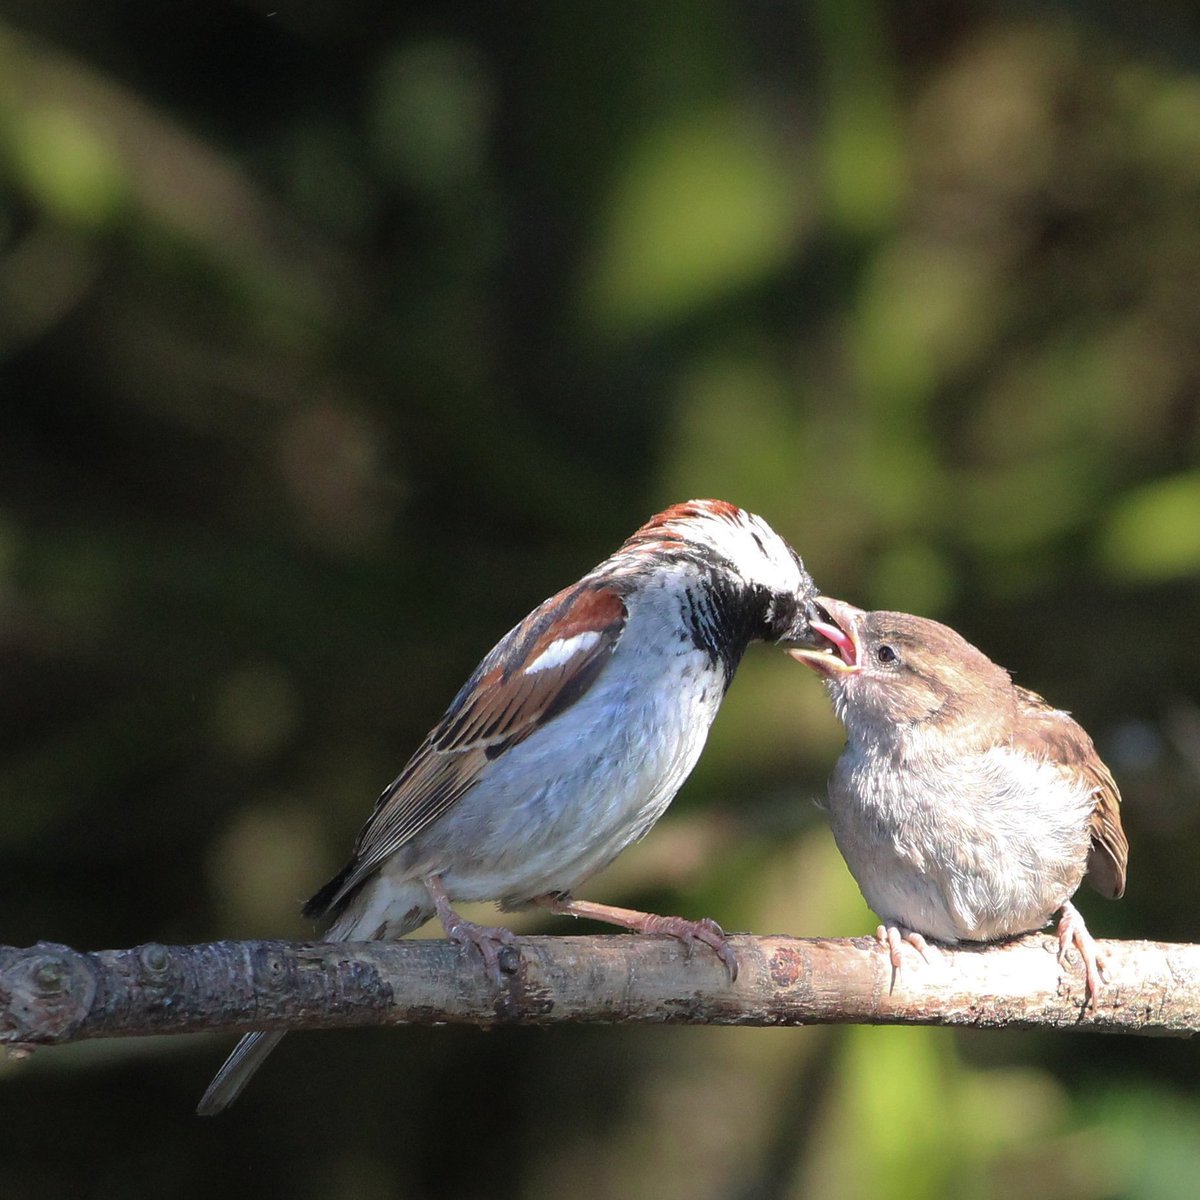 Feeding time ⌚ ❤️ A Male House Sparrow feeding its young.

House Sparrow / Passer domesticus 
#housesparrow #passerdomesticus #sparrows  #TwitterNatureCommunity #eye_spy_nature #eye_spy_birds #bird_brilliance #birds  #nature  #birdwatchireland